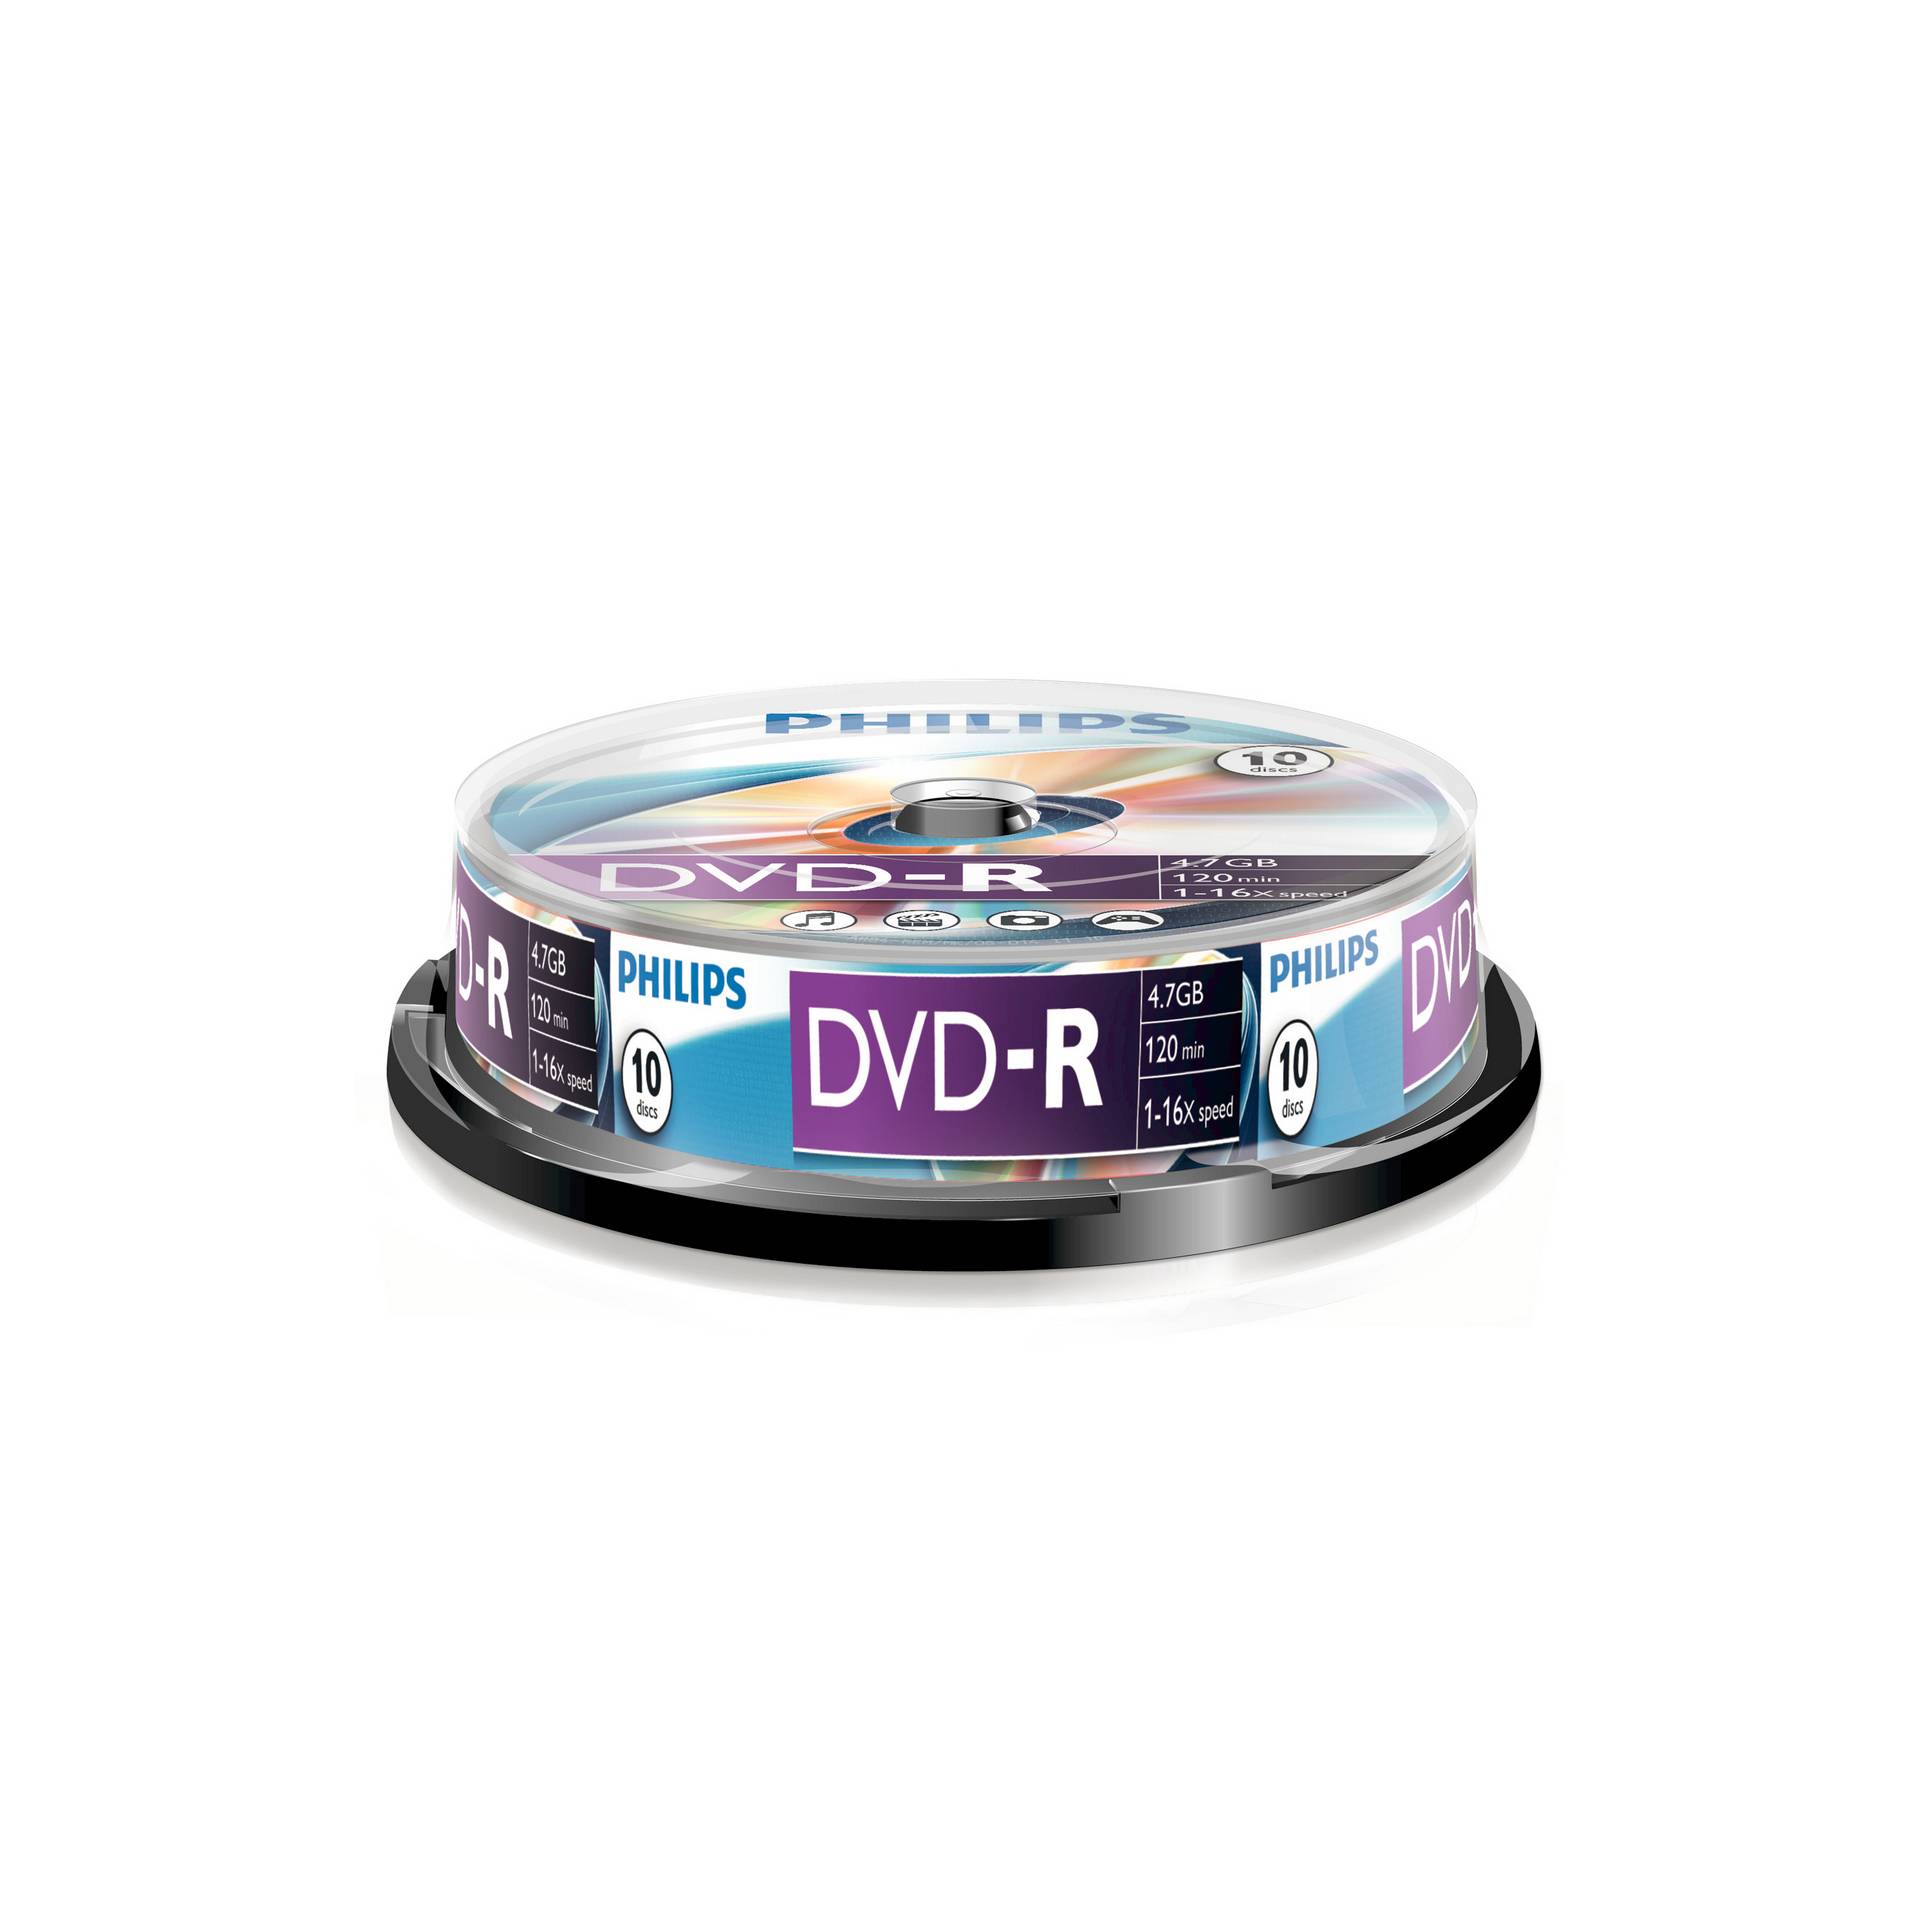 1x10 Philips DVD-R 4,7GB 16x SP